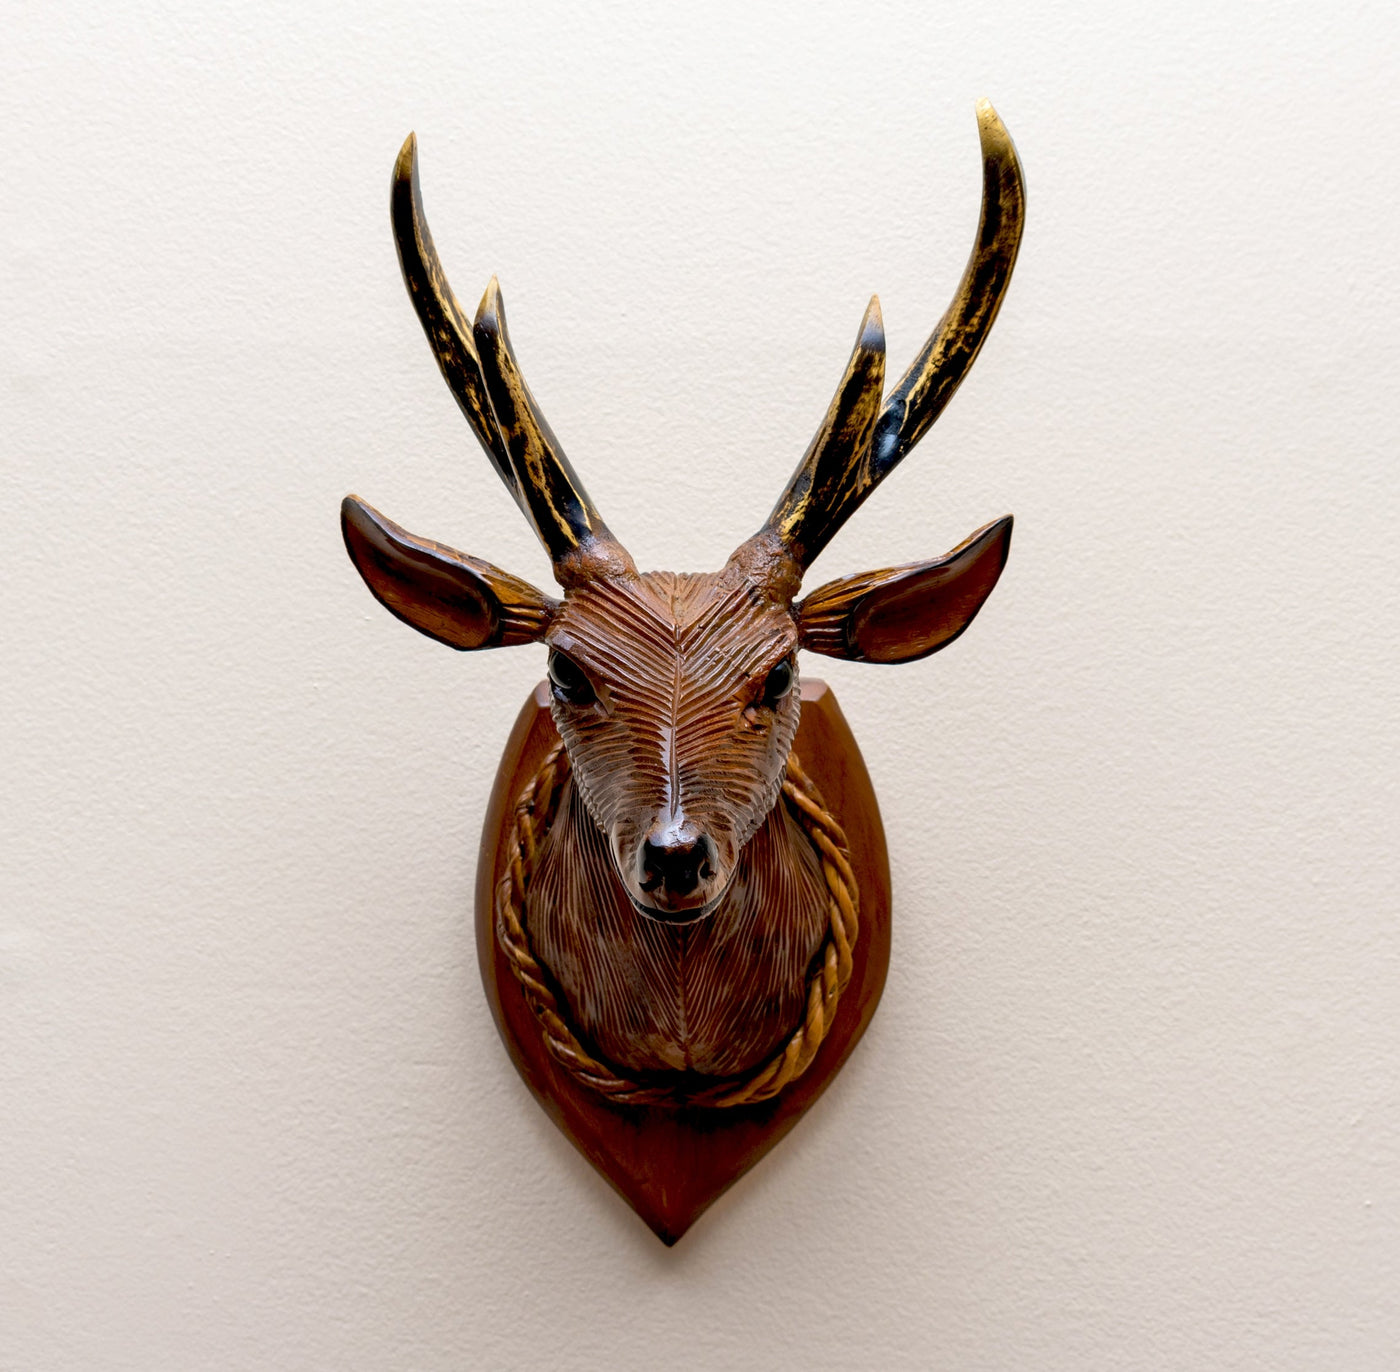 14" Deer Wall Hanging Decor Head Sculpture Art Decorative Home Decor Accent Lodge Wooden Handmade Figurine Handcrafted Decoration